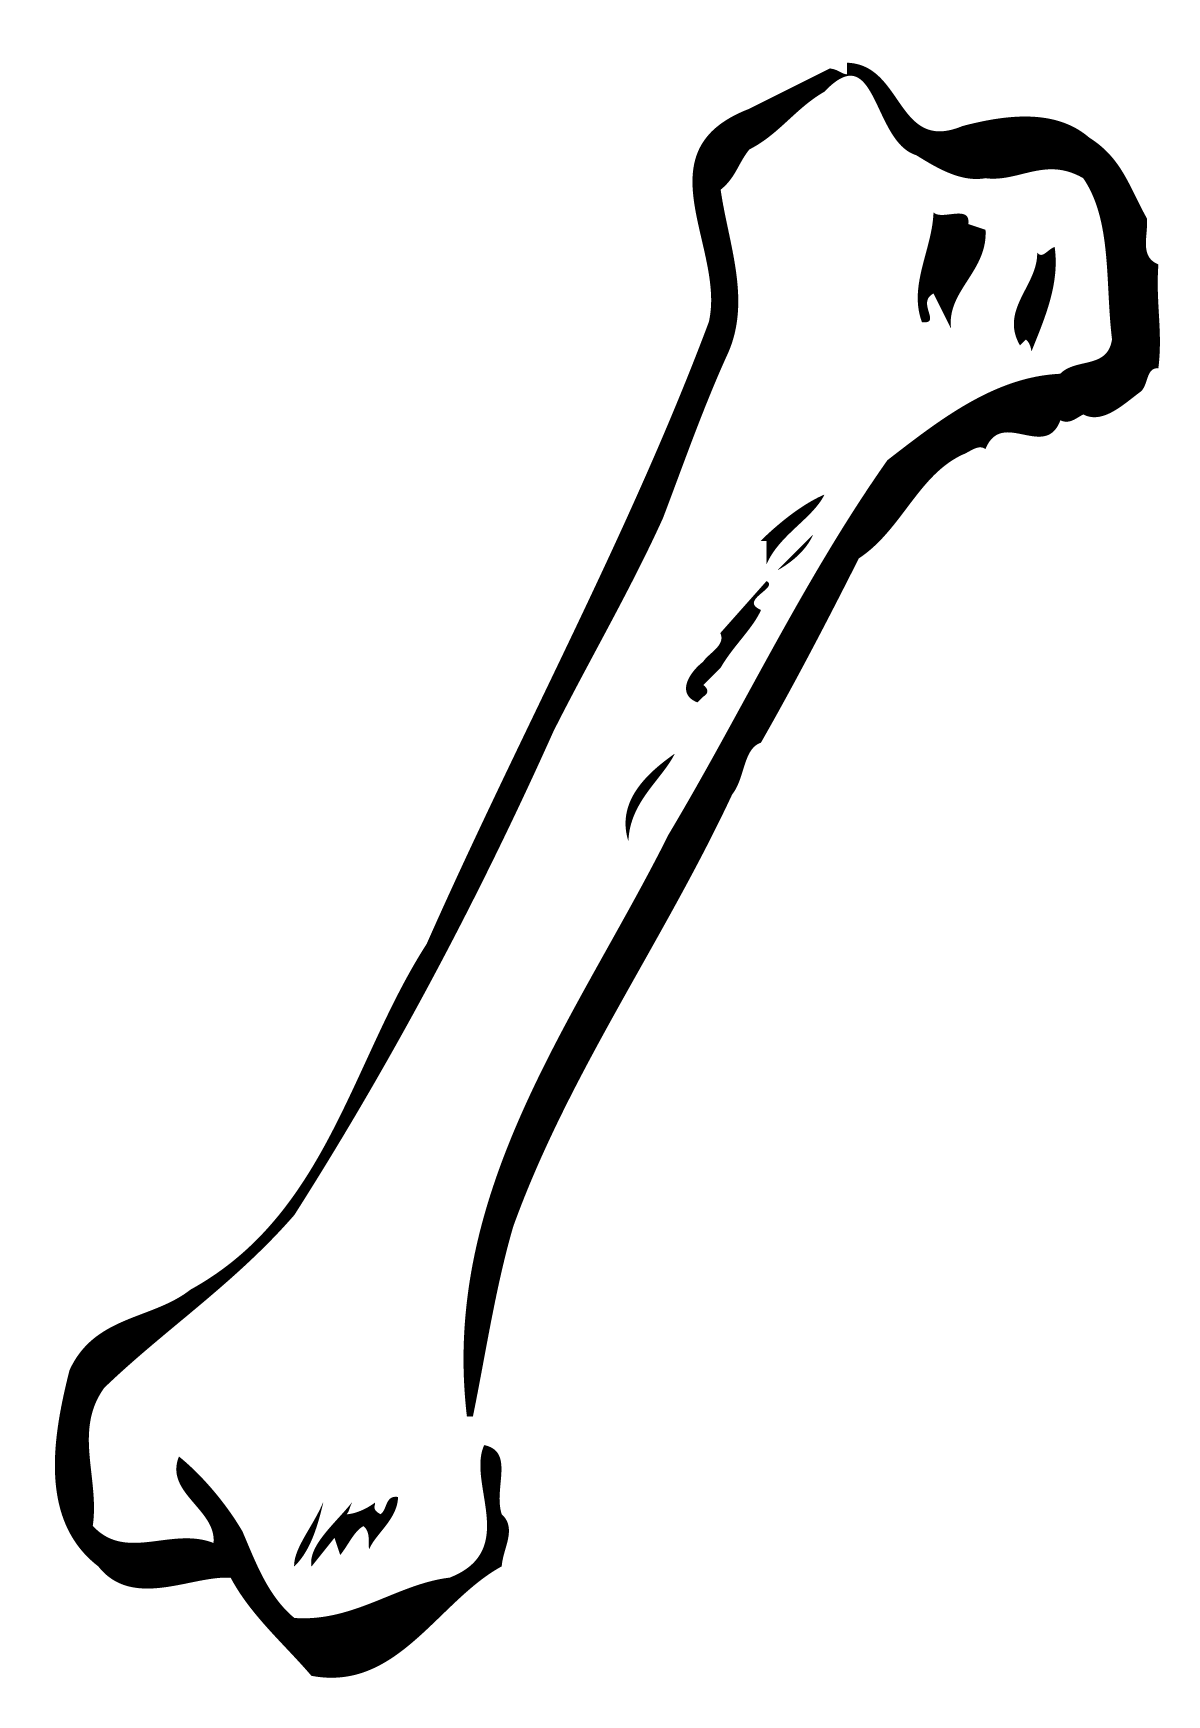 Bones clipart. Dog bone border panda